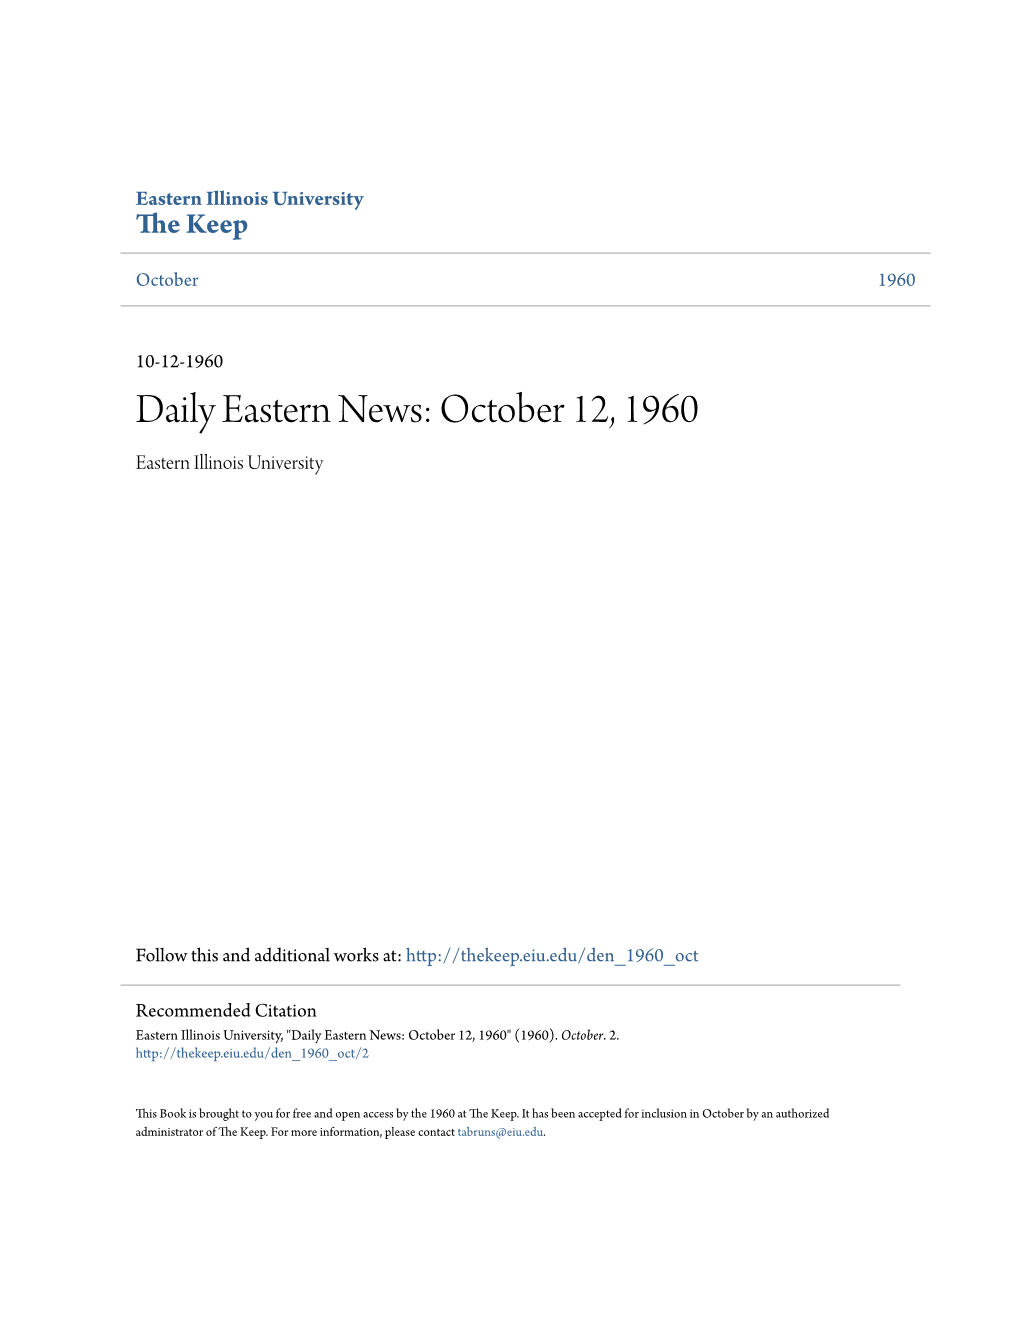 Daily Eastern News: October 12, 1960 Eastern Illinois University